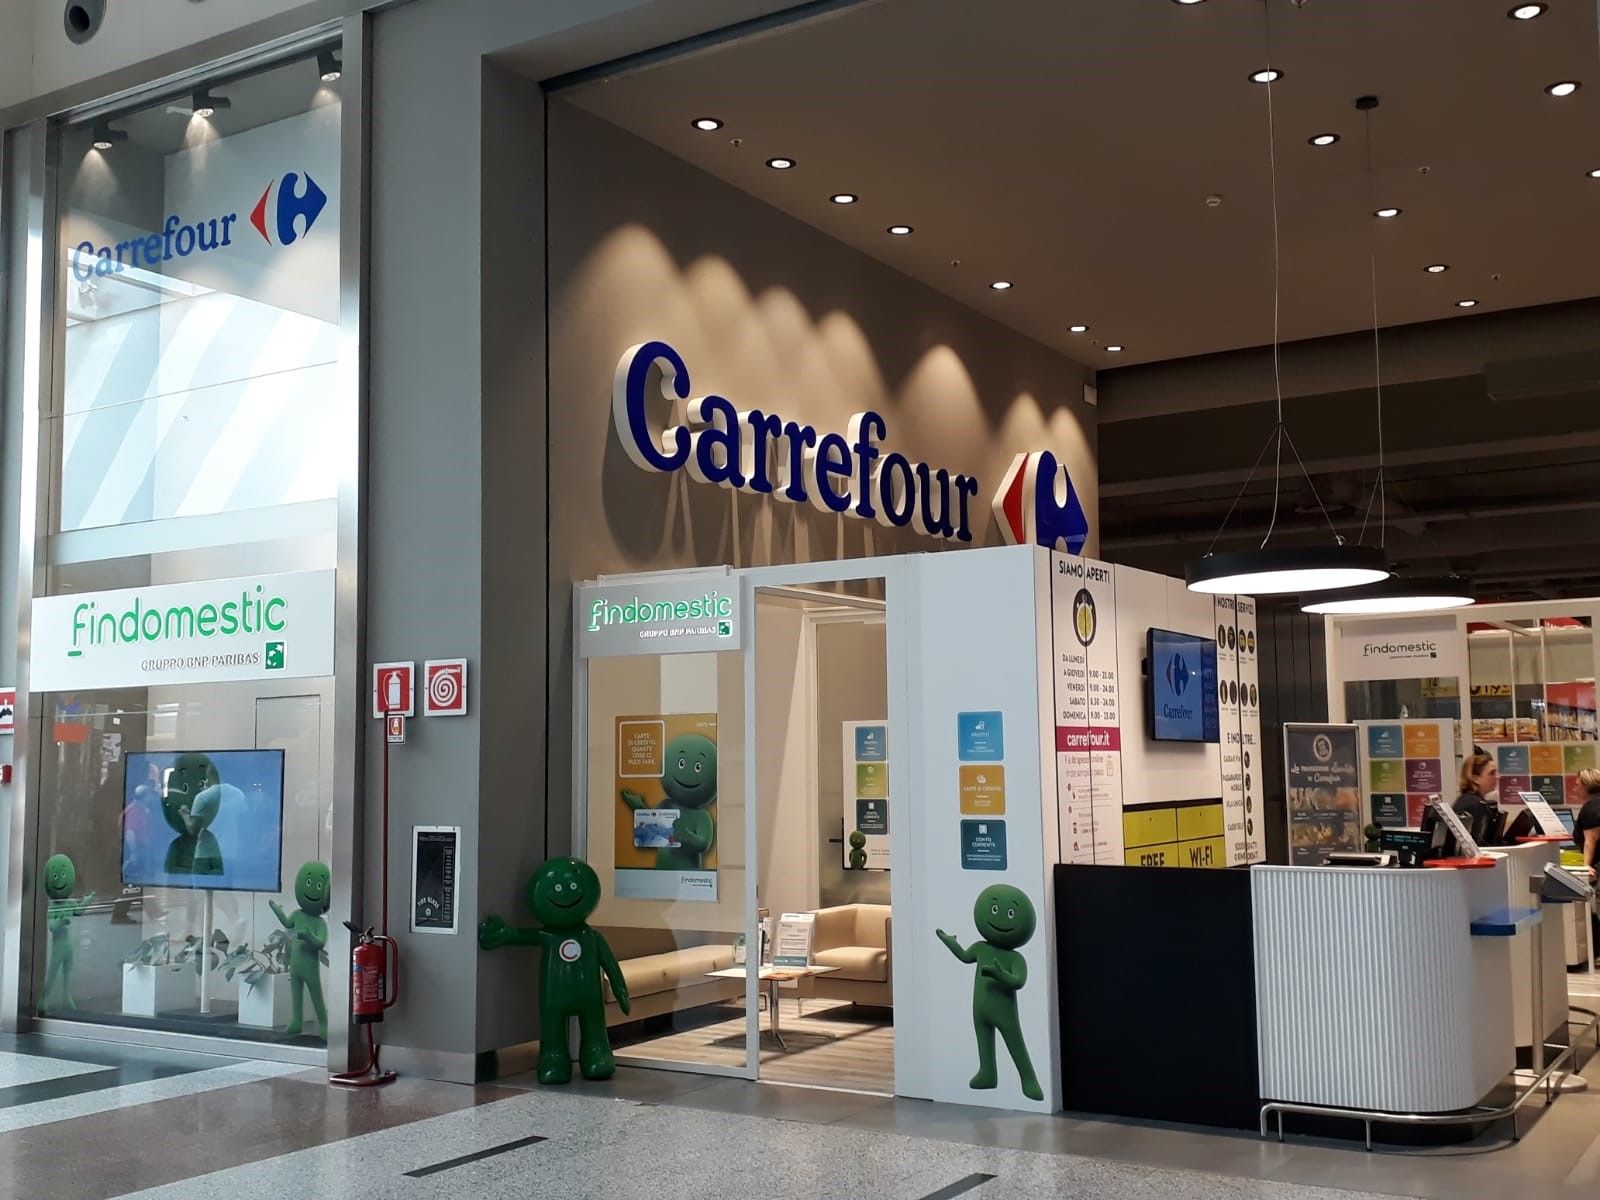 Carrefour E Findomestic Siglano Partnerhip Su Carte Credito E Agenzie